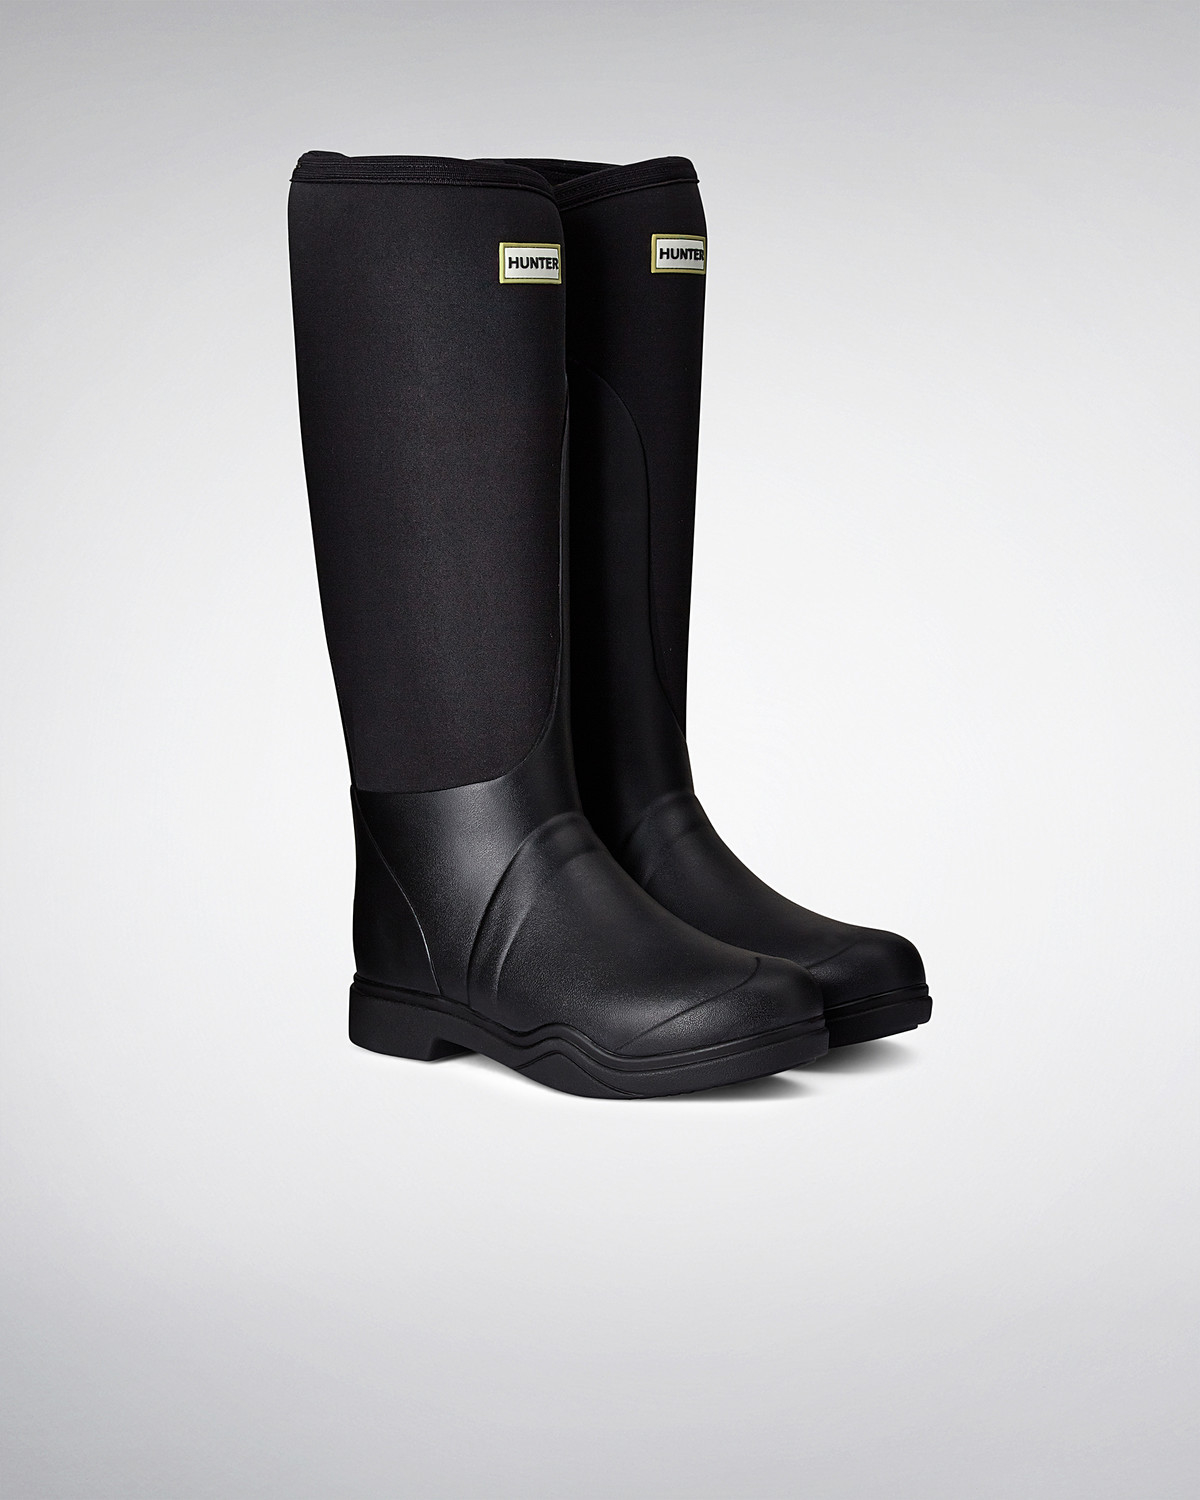 Lyst - Hunter Balmoral Equestrian Neoprene Stretch Rain Boots in Black